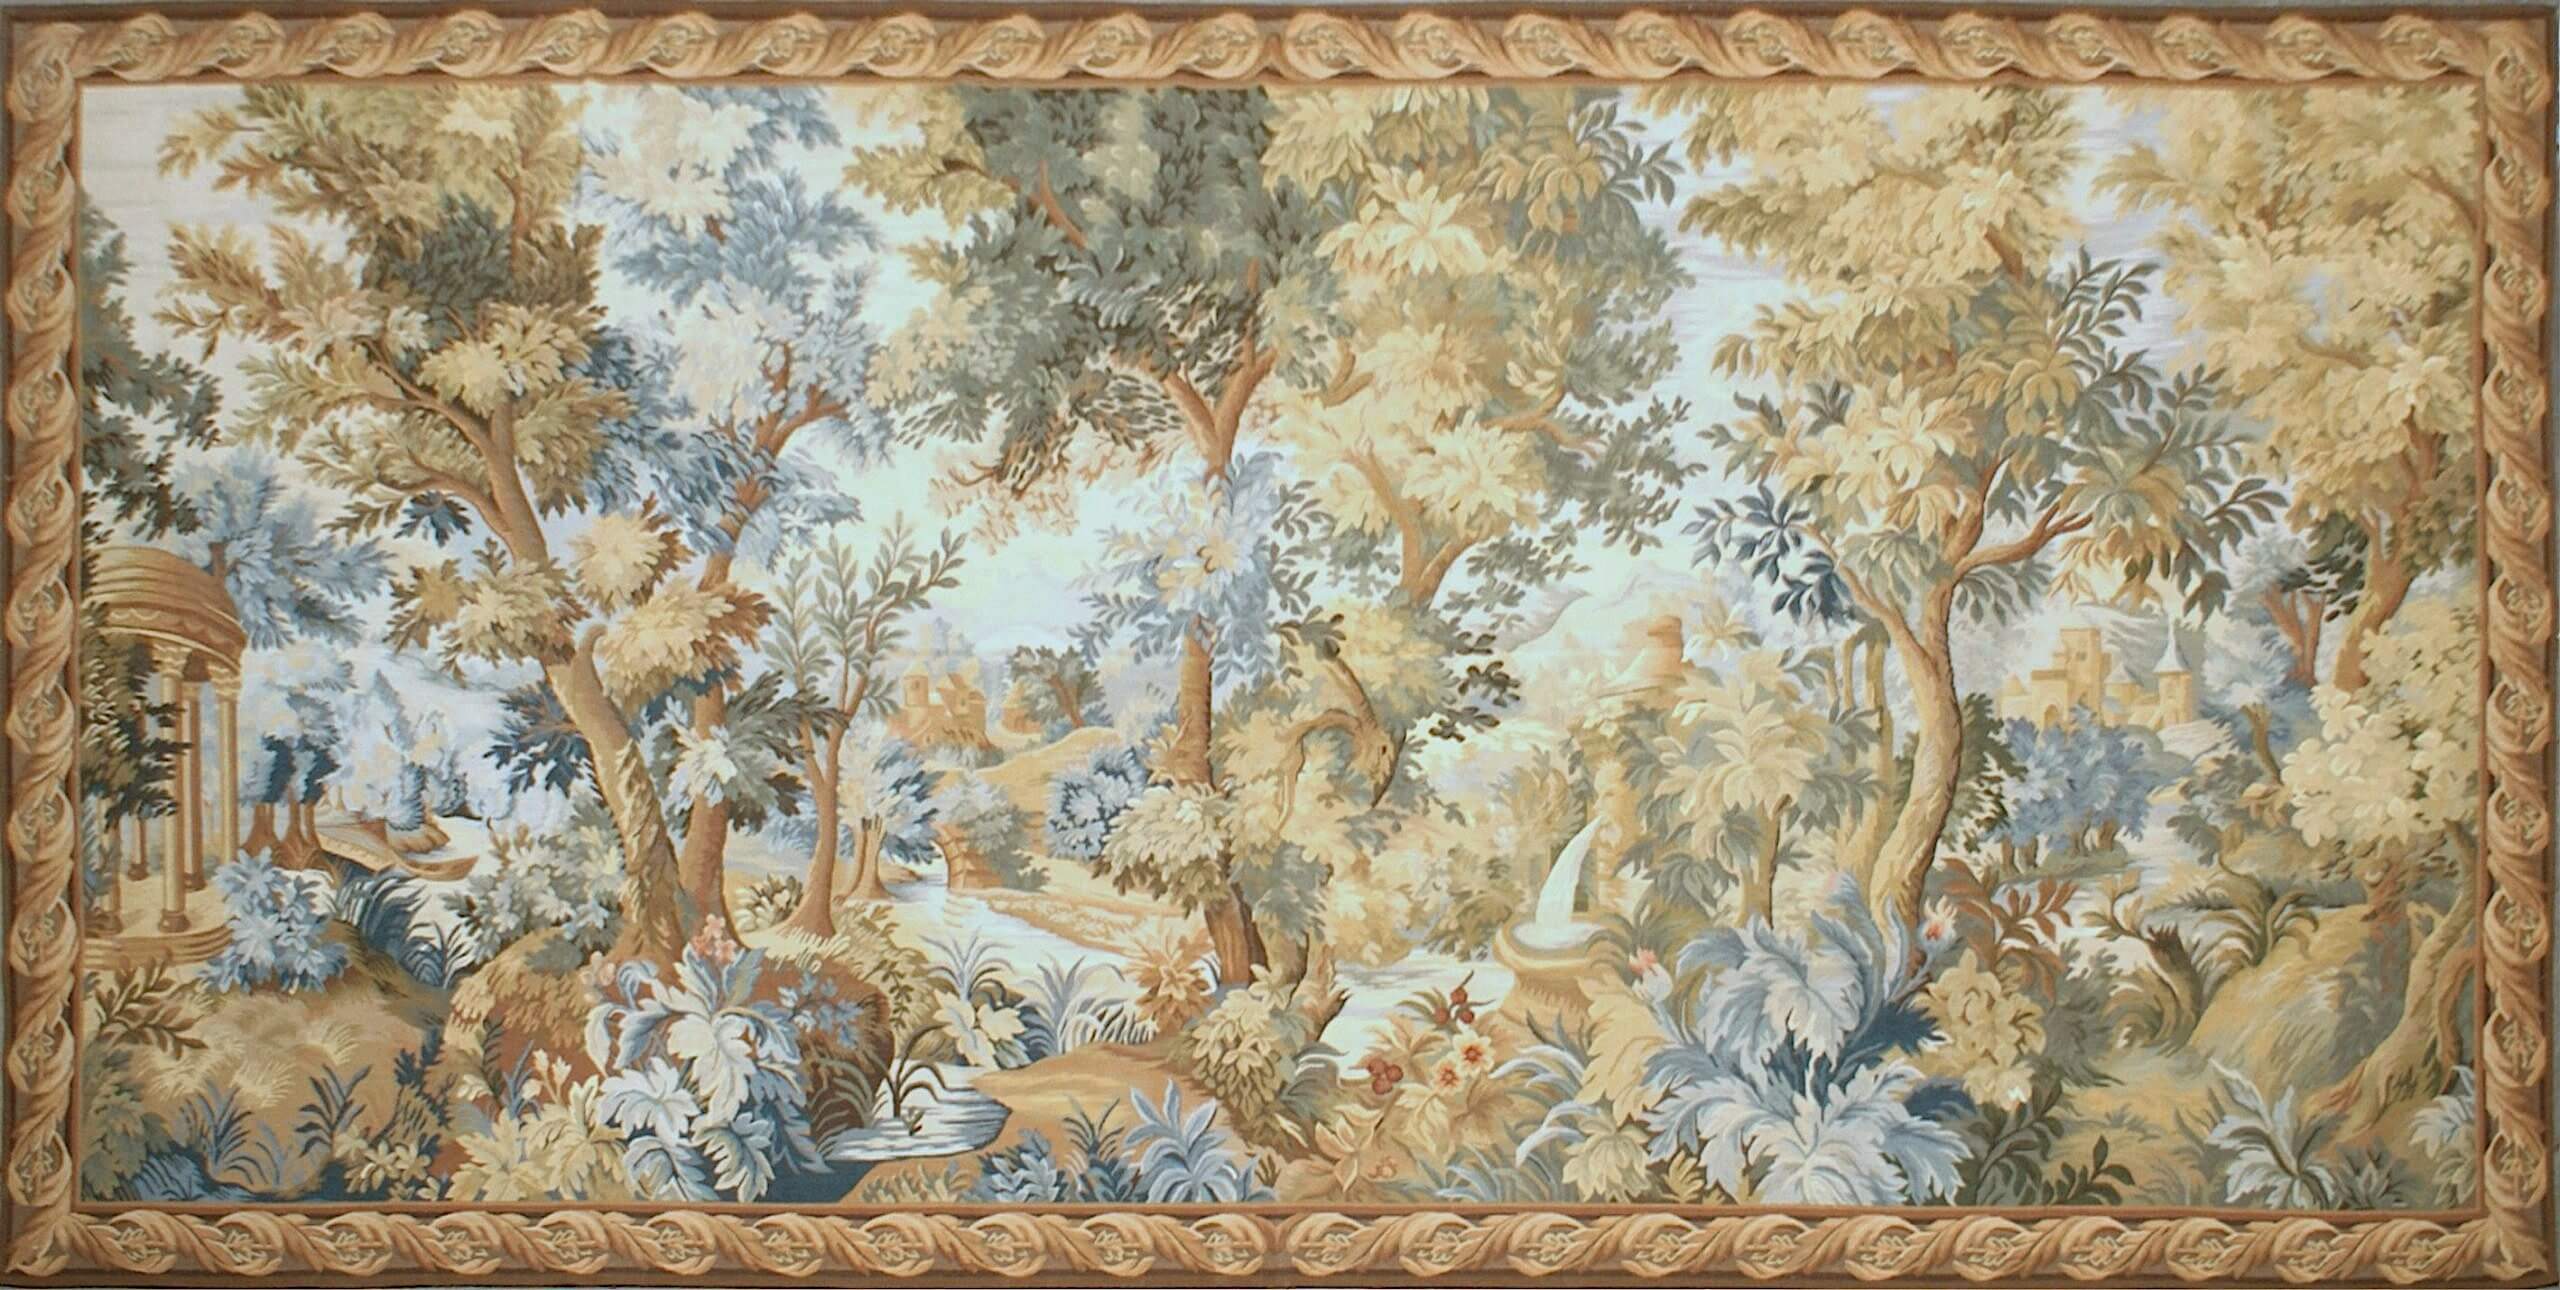 Hand Woven Verdure Scene French Style Wall Tapestry Hand Woven Verdure Scene French Wall Tapestry